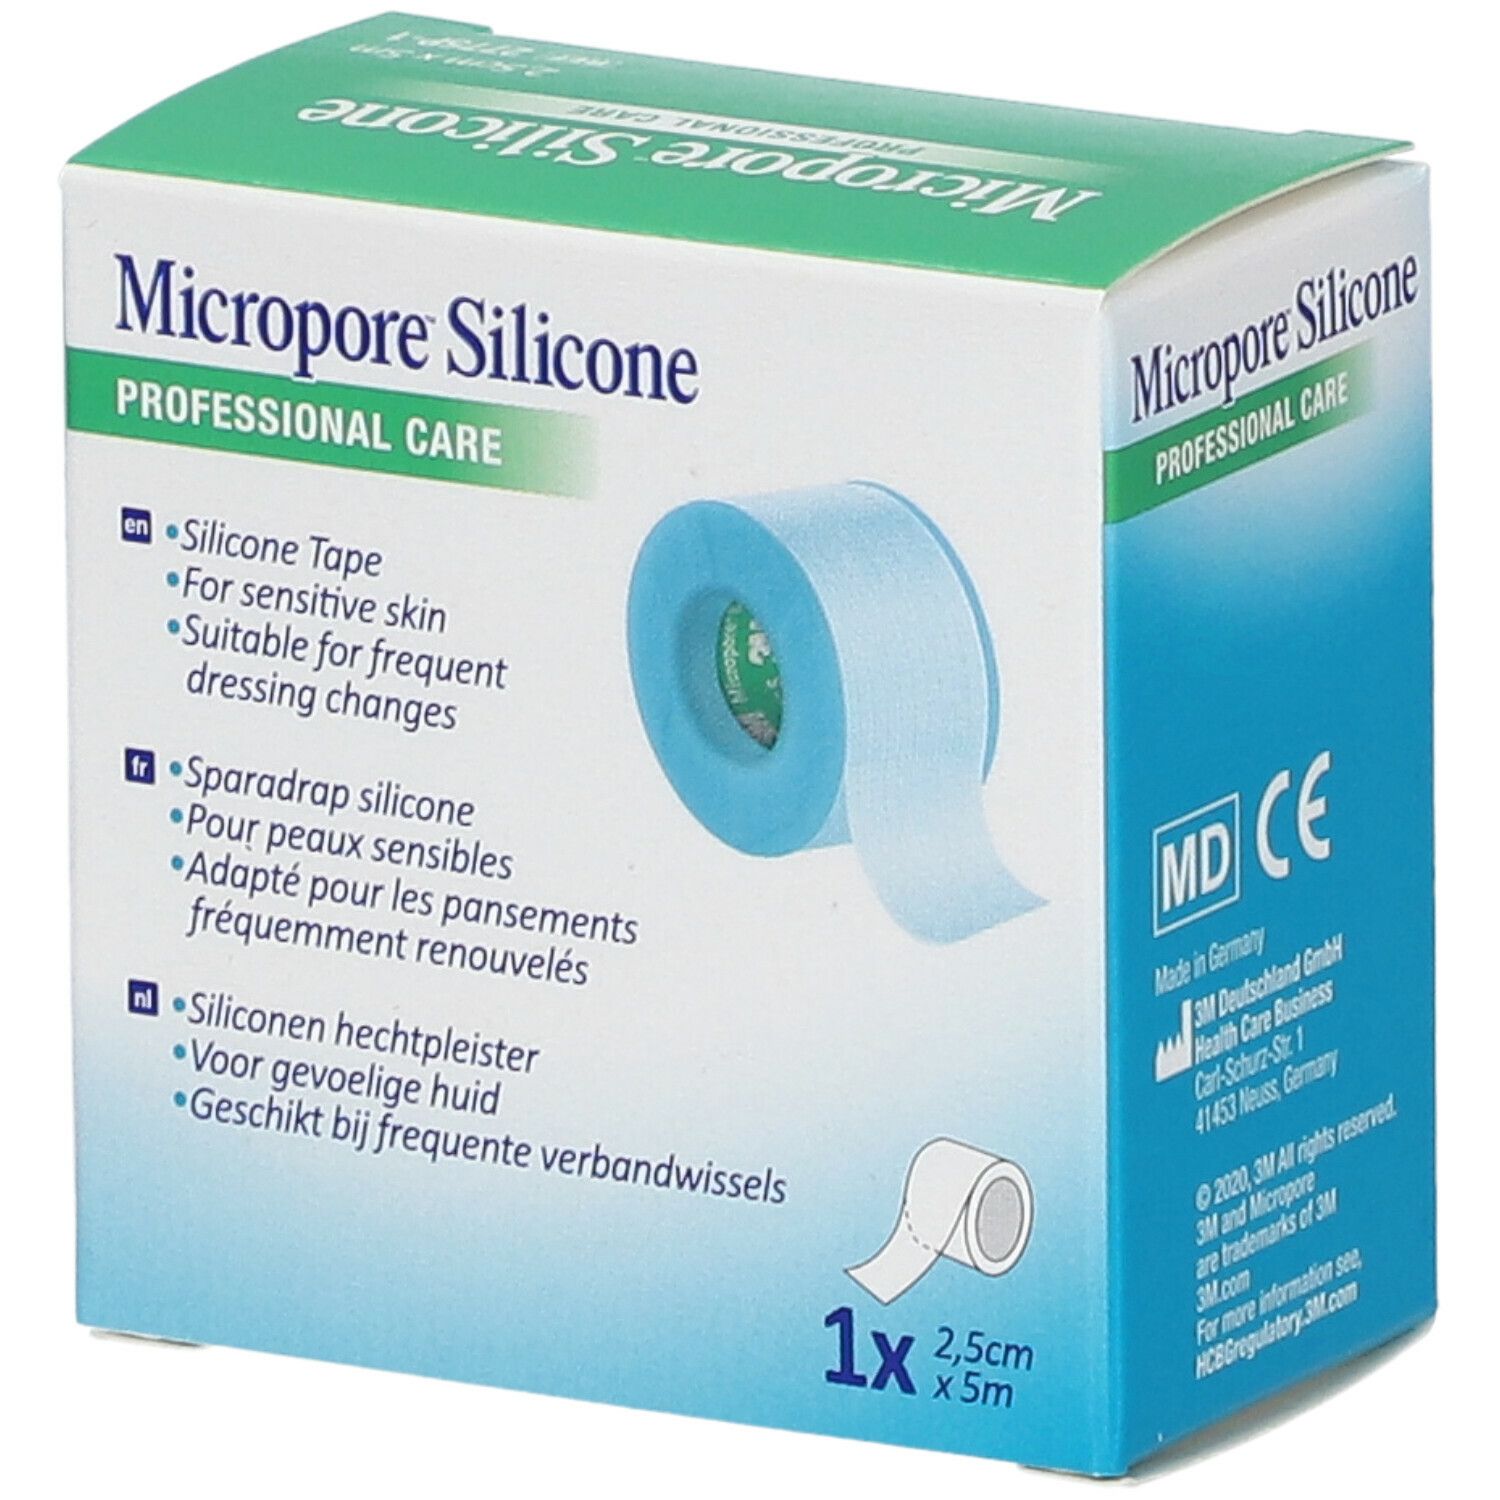 3M Micropore Silicone Medische Hechtpleister 2.5cm X 5m 2775-1FR